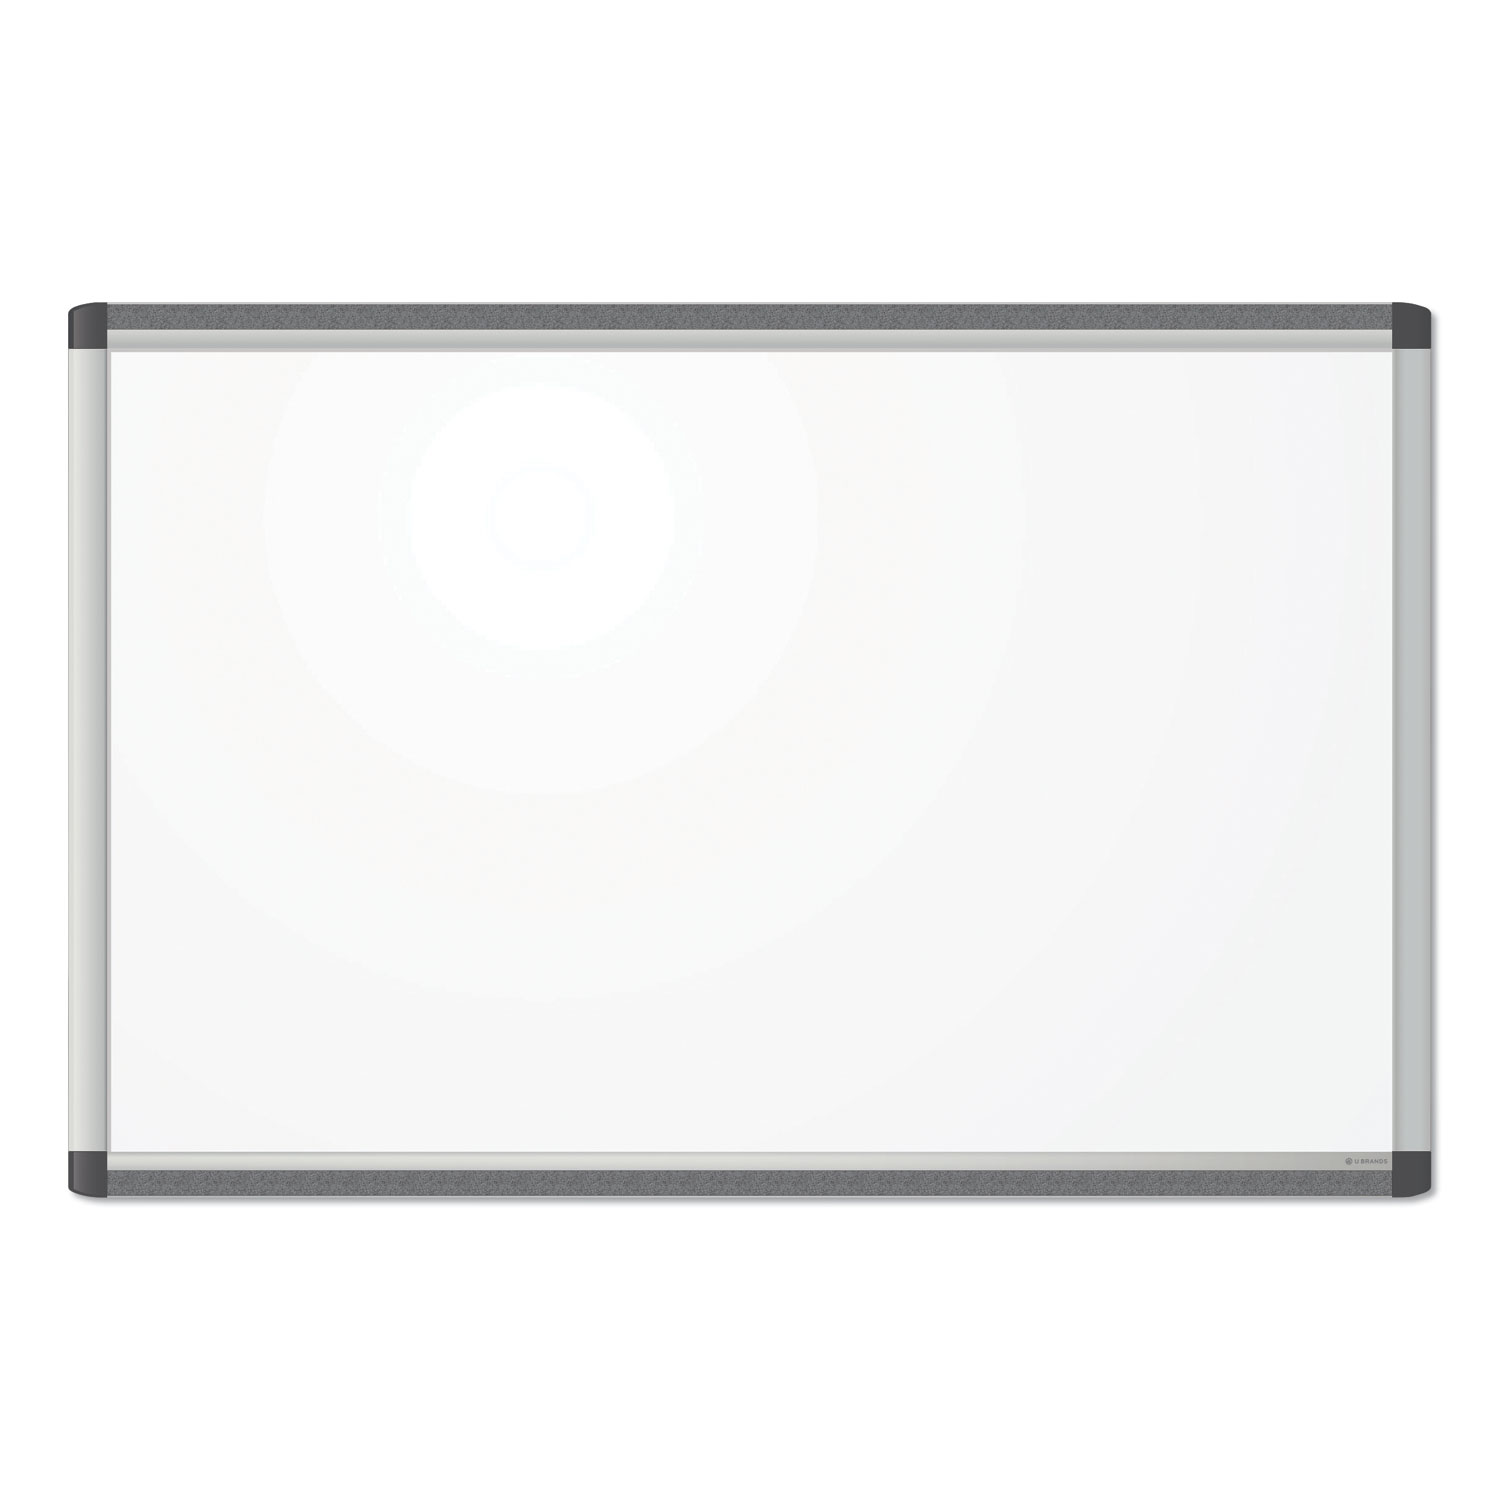  U Brands 2805U00-01 PINIT Magnetic Dry Erase Board, 36 x 24, White (UBR2805U0001) 